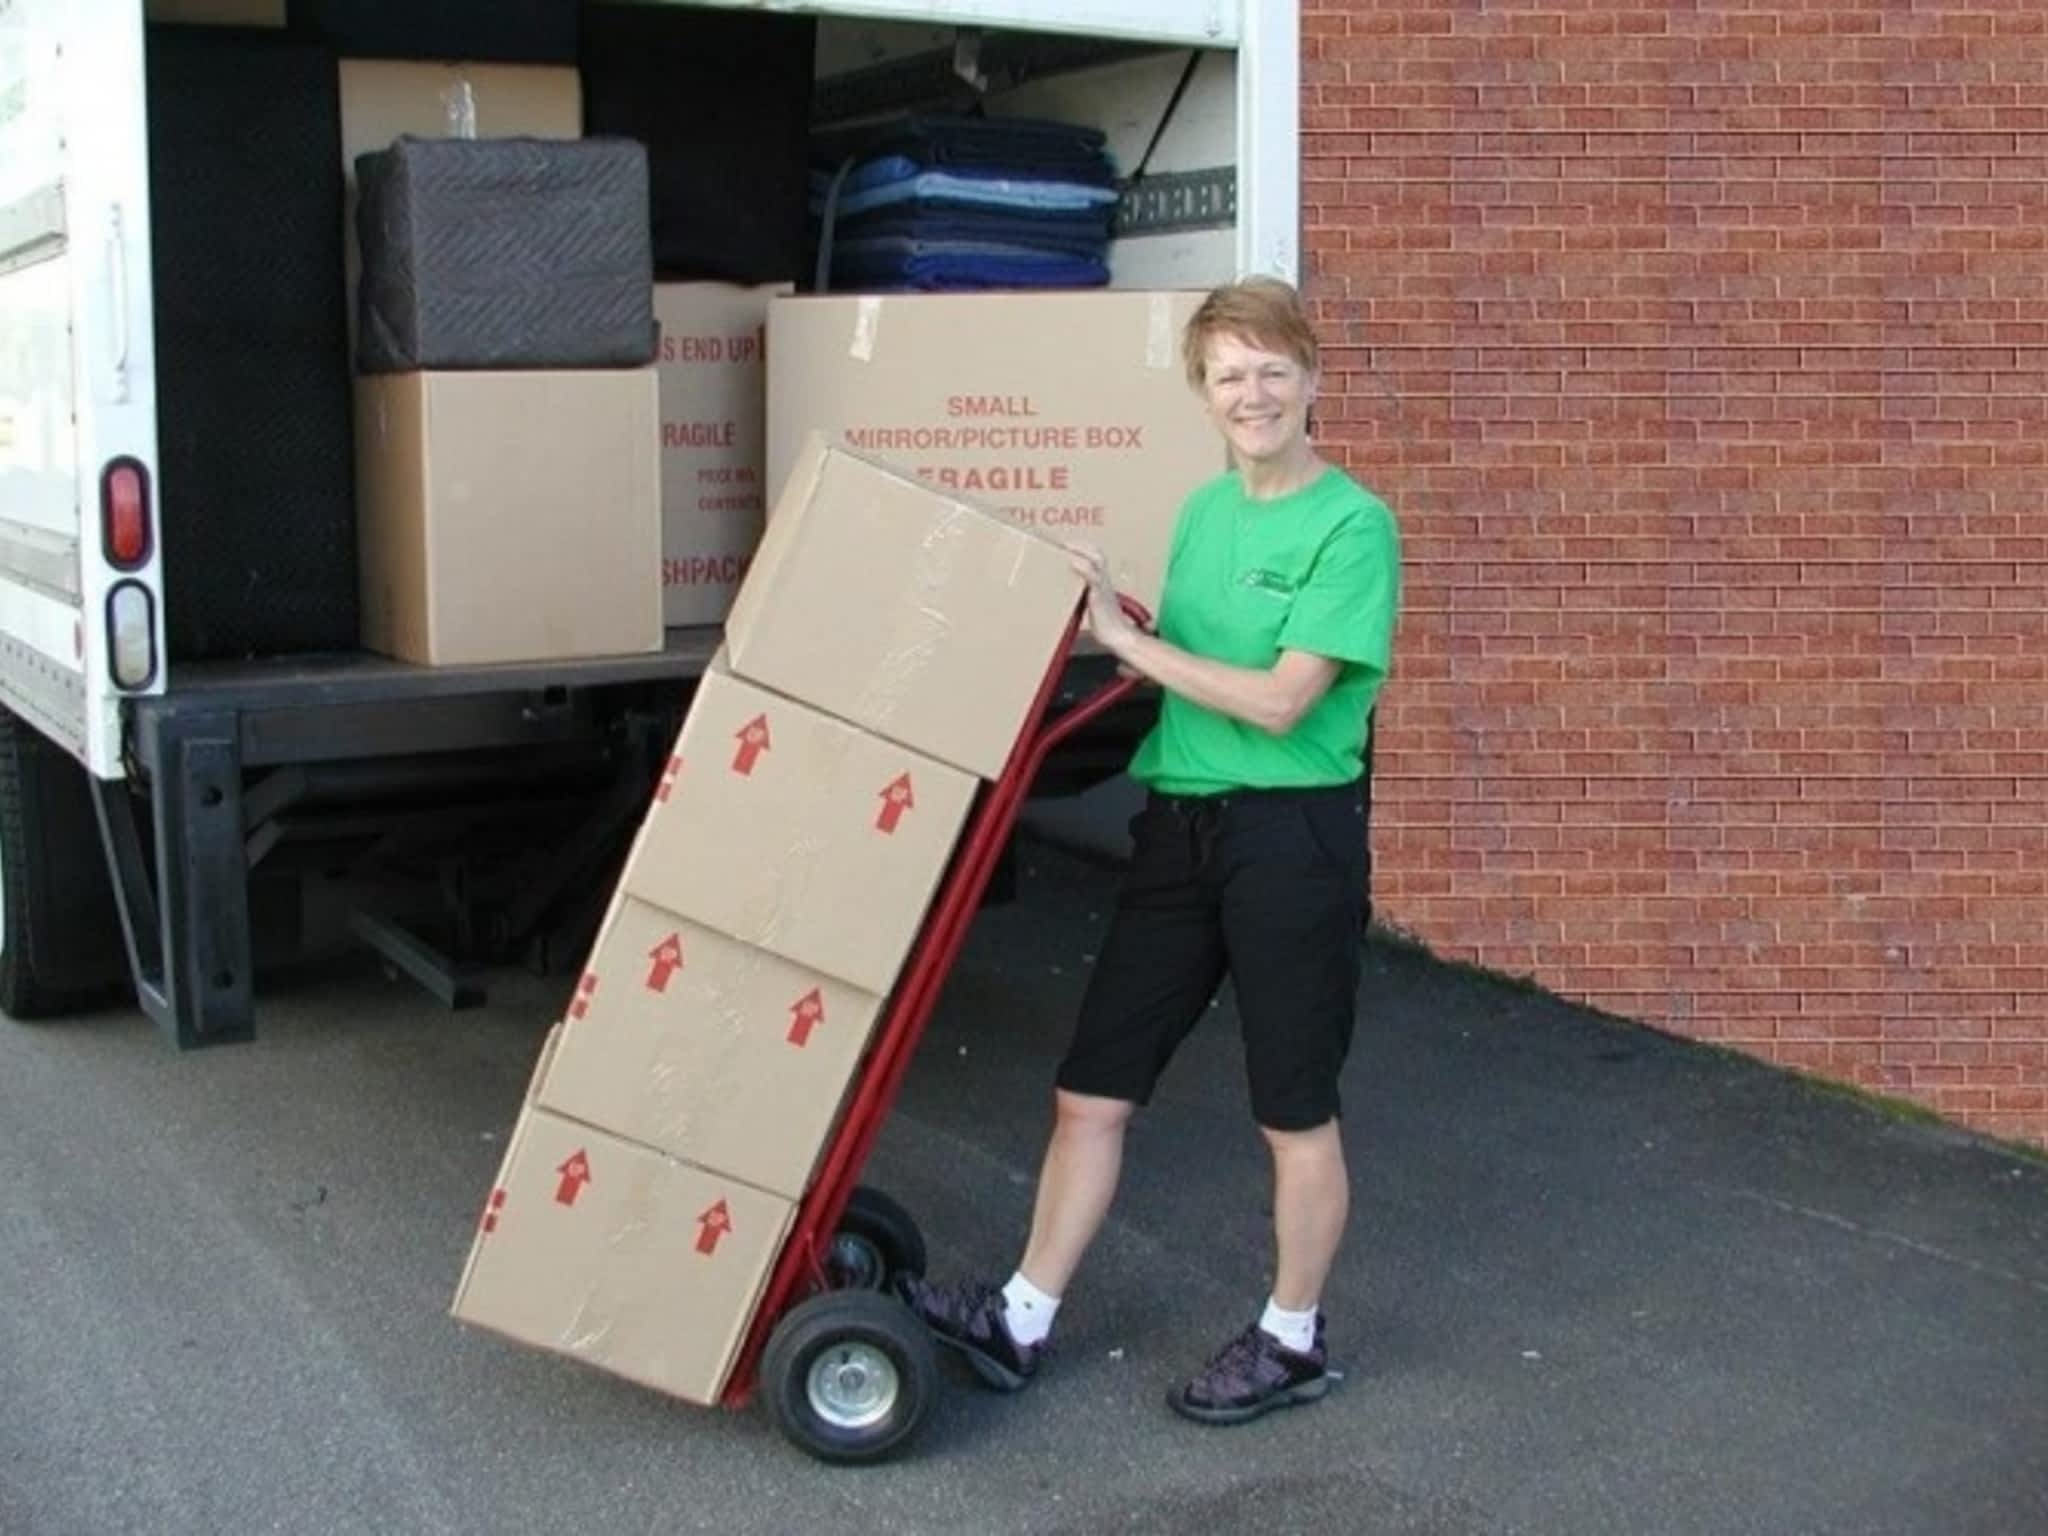 photo Lambert's Moving Services